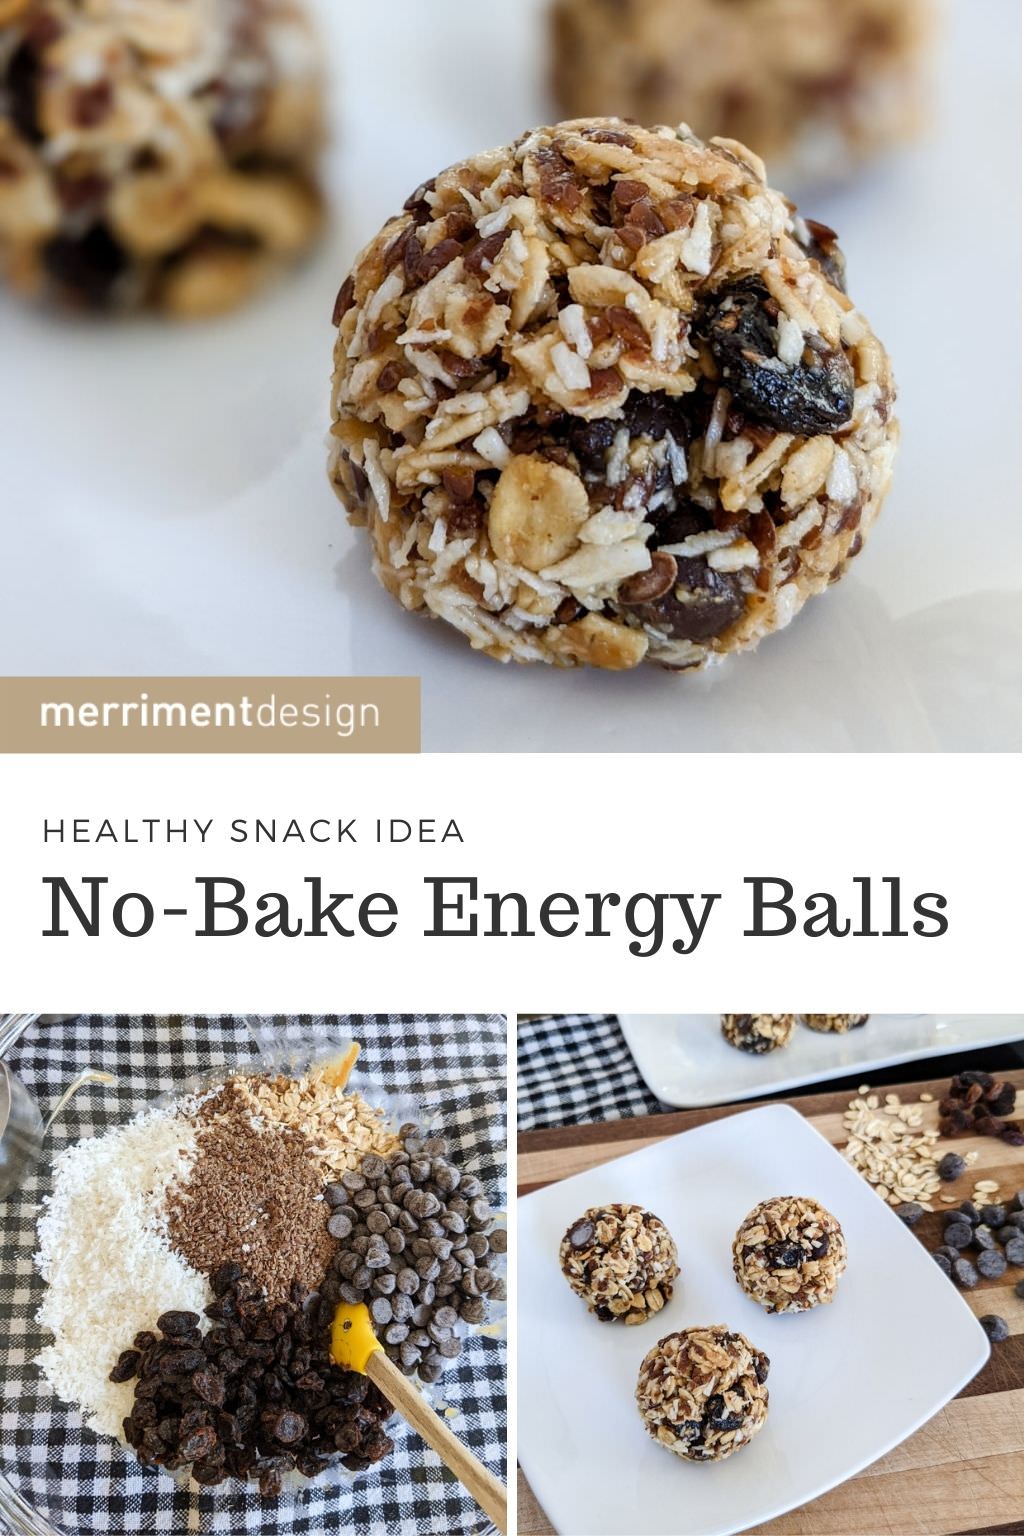 Yummy energy balls recipe - healthy snacks idea